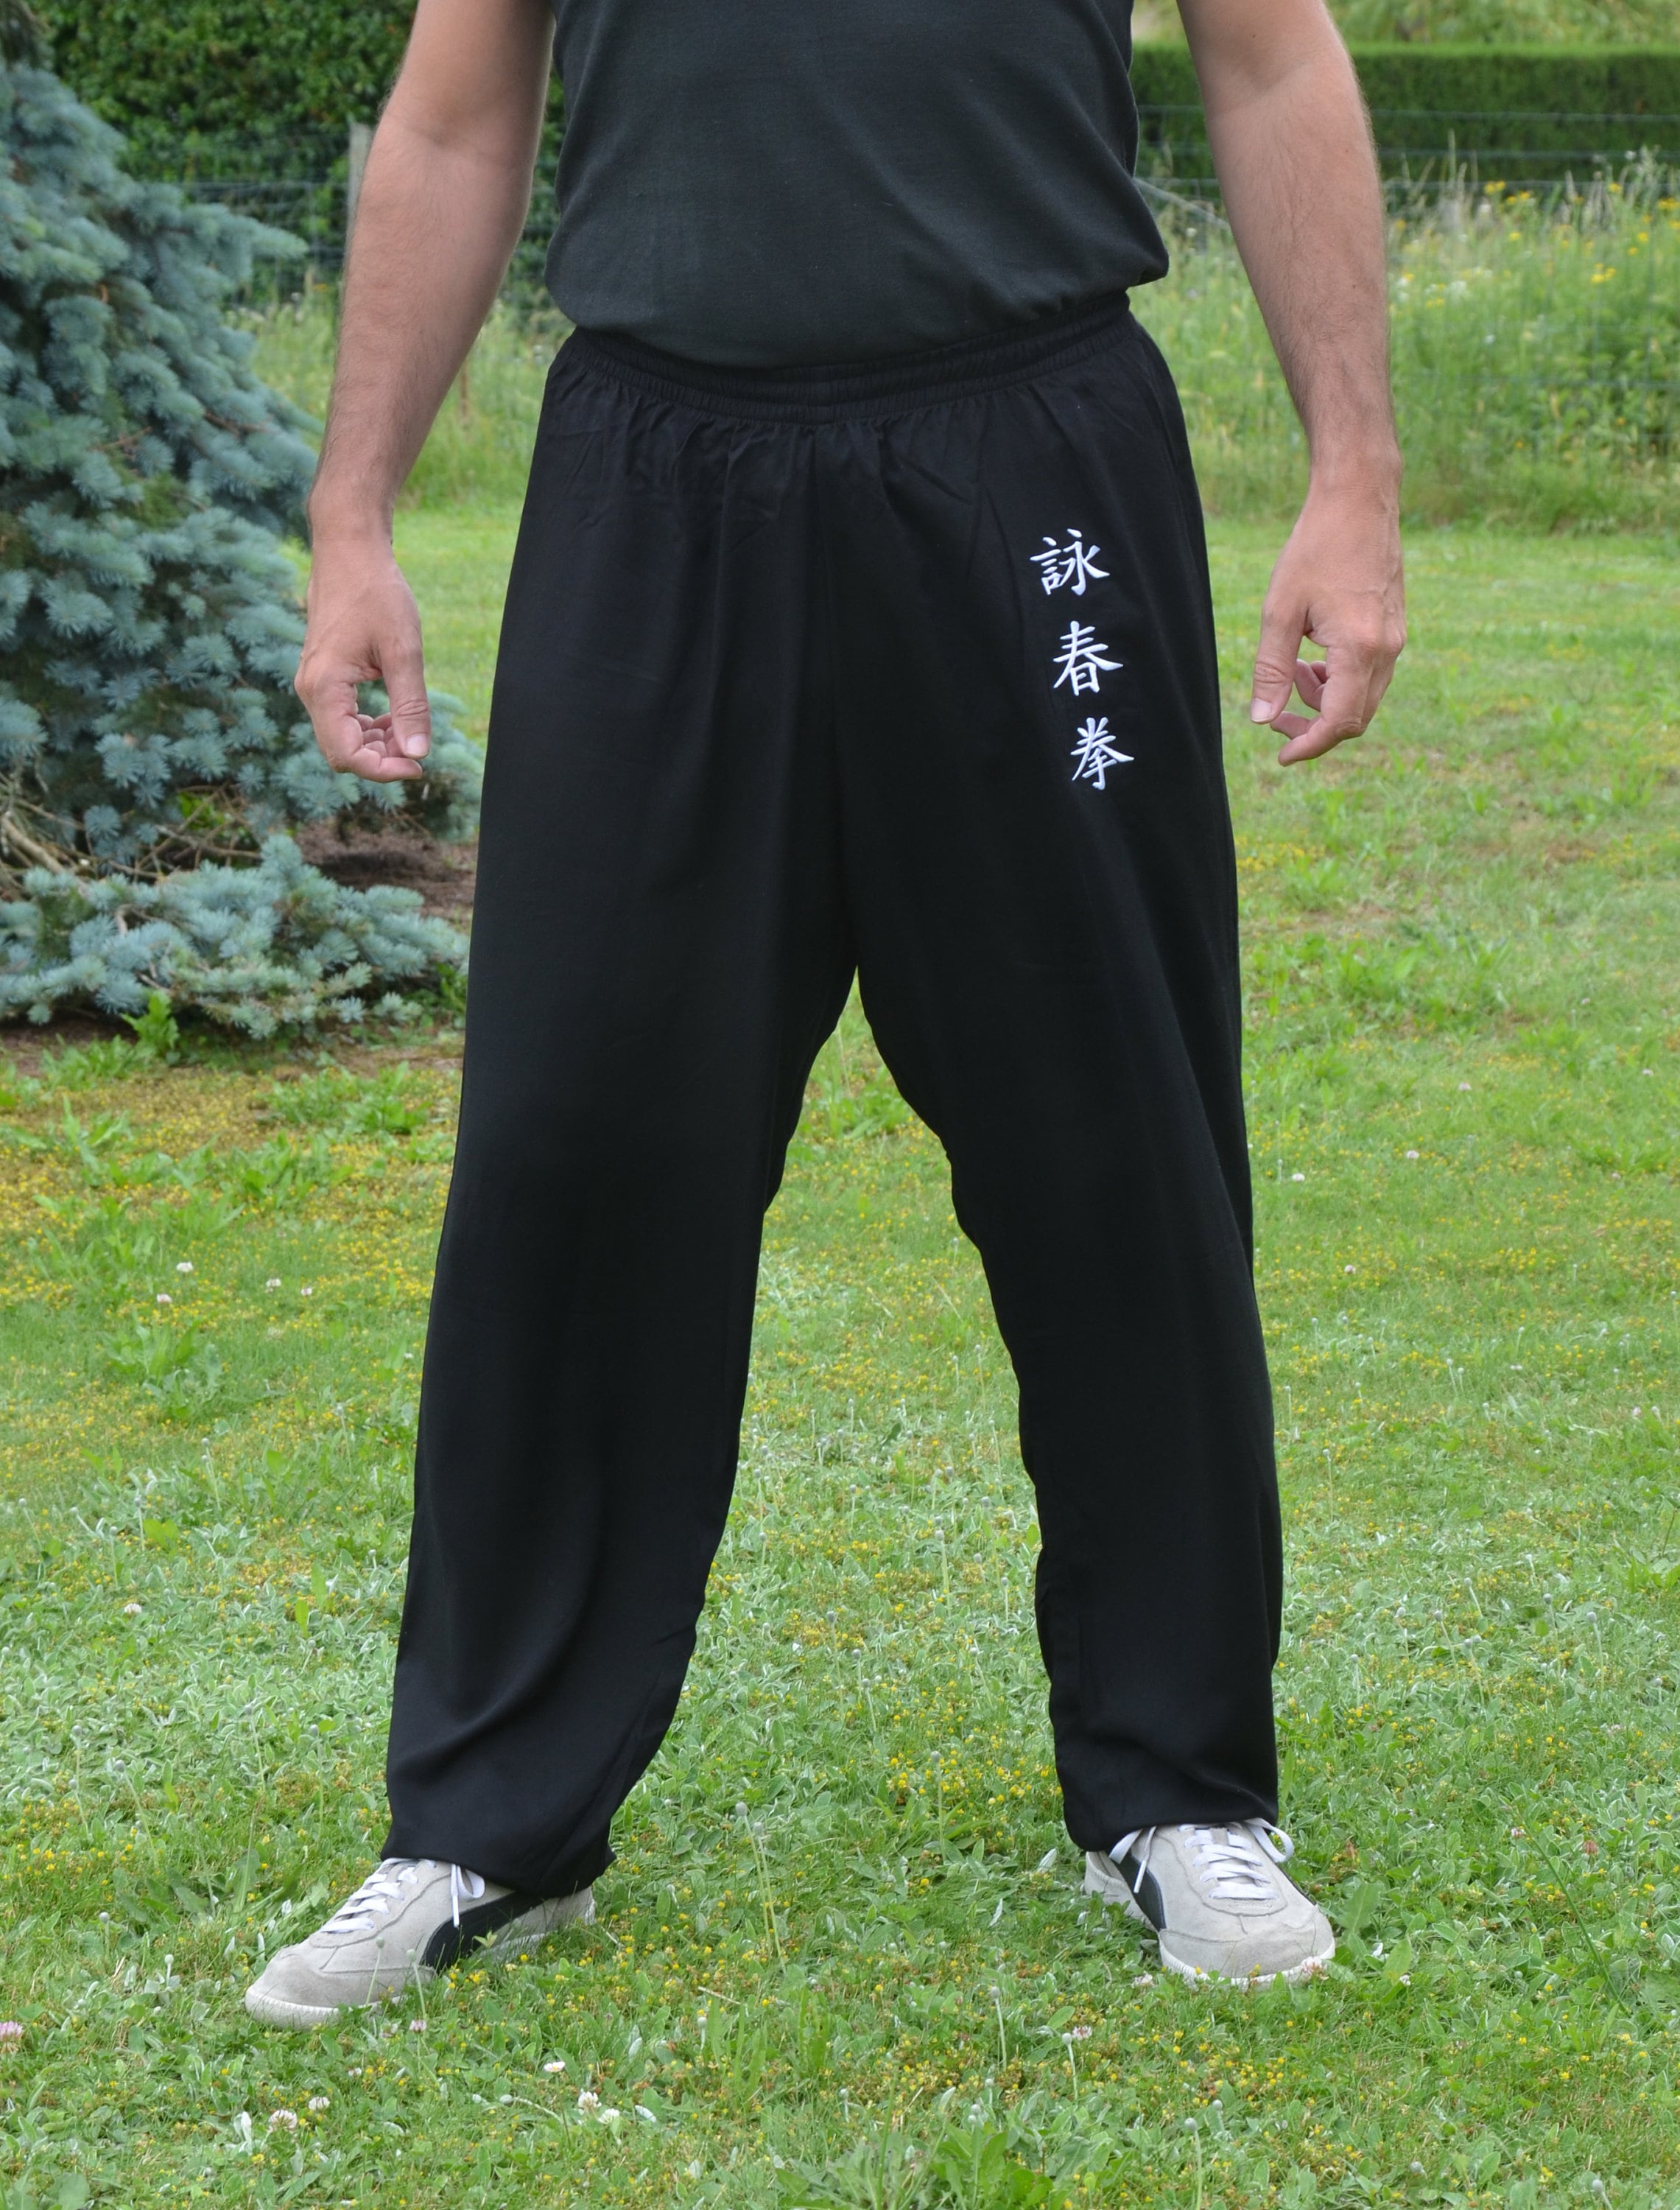 Buy Tai Chi Pants Wide Leg Men Women Kids Yoga Pants Qigong Open on The  Ankles (Black, Size M) at Amazon.in